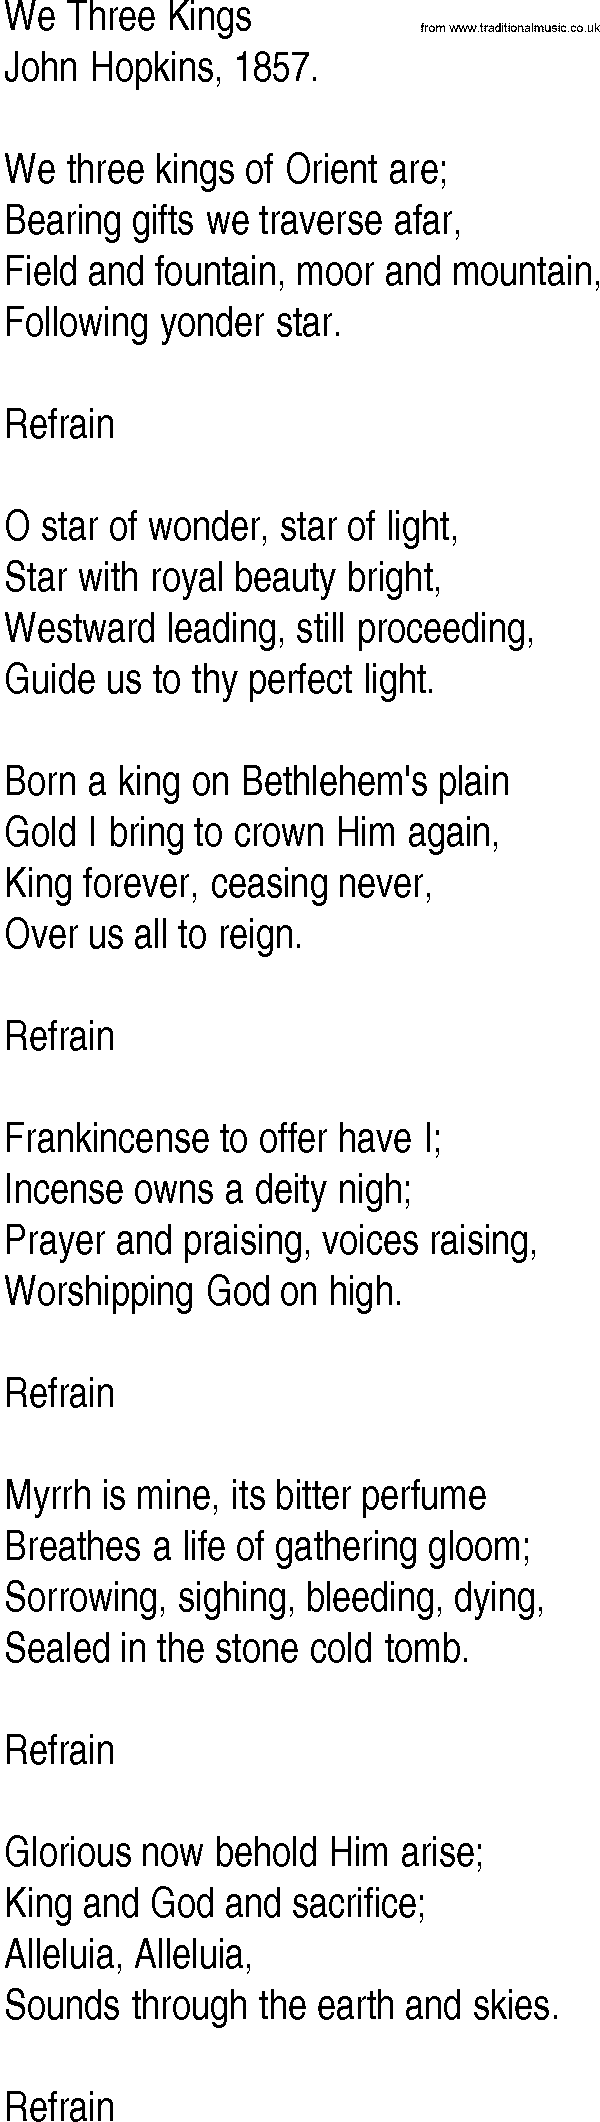 Hymn and Gospel Song: We Three Kings by John Hopkins lyrics